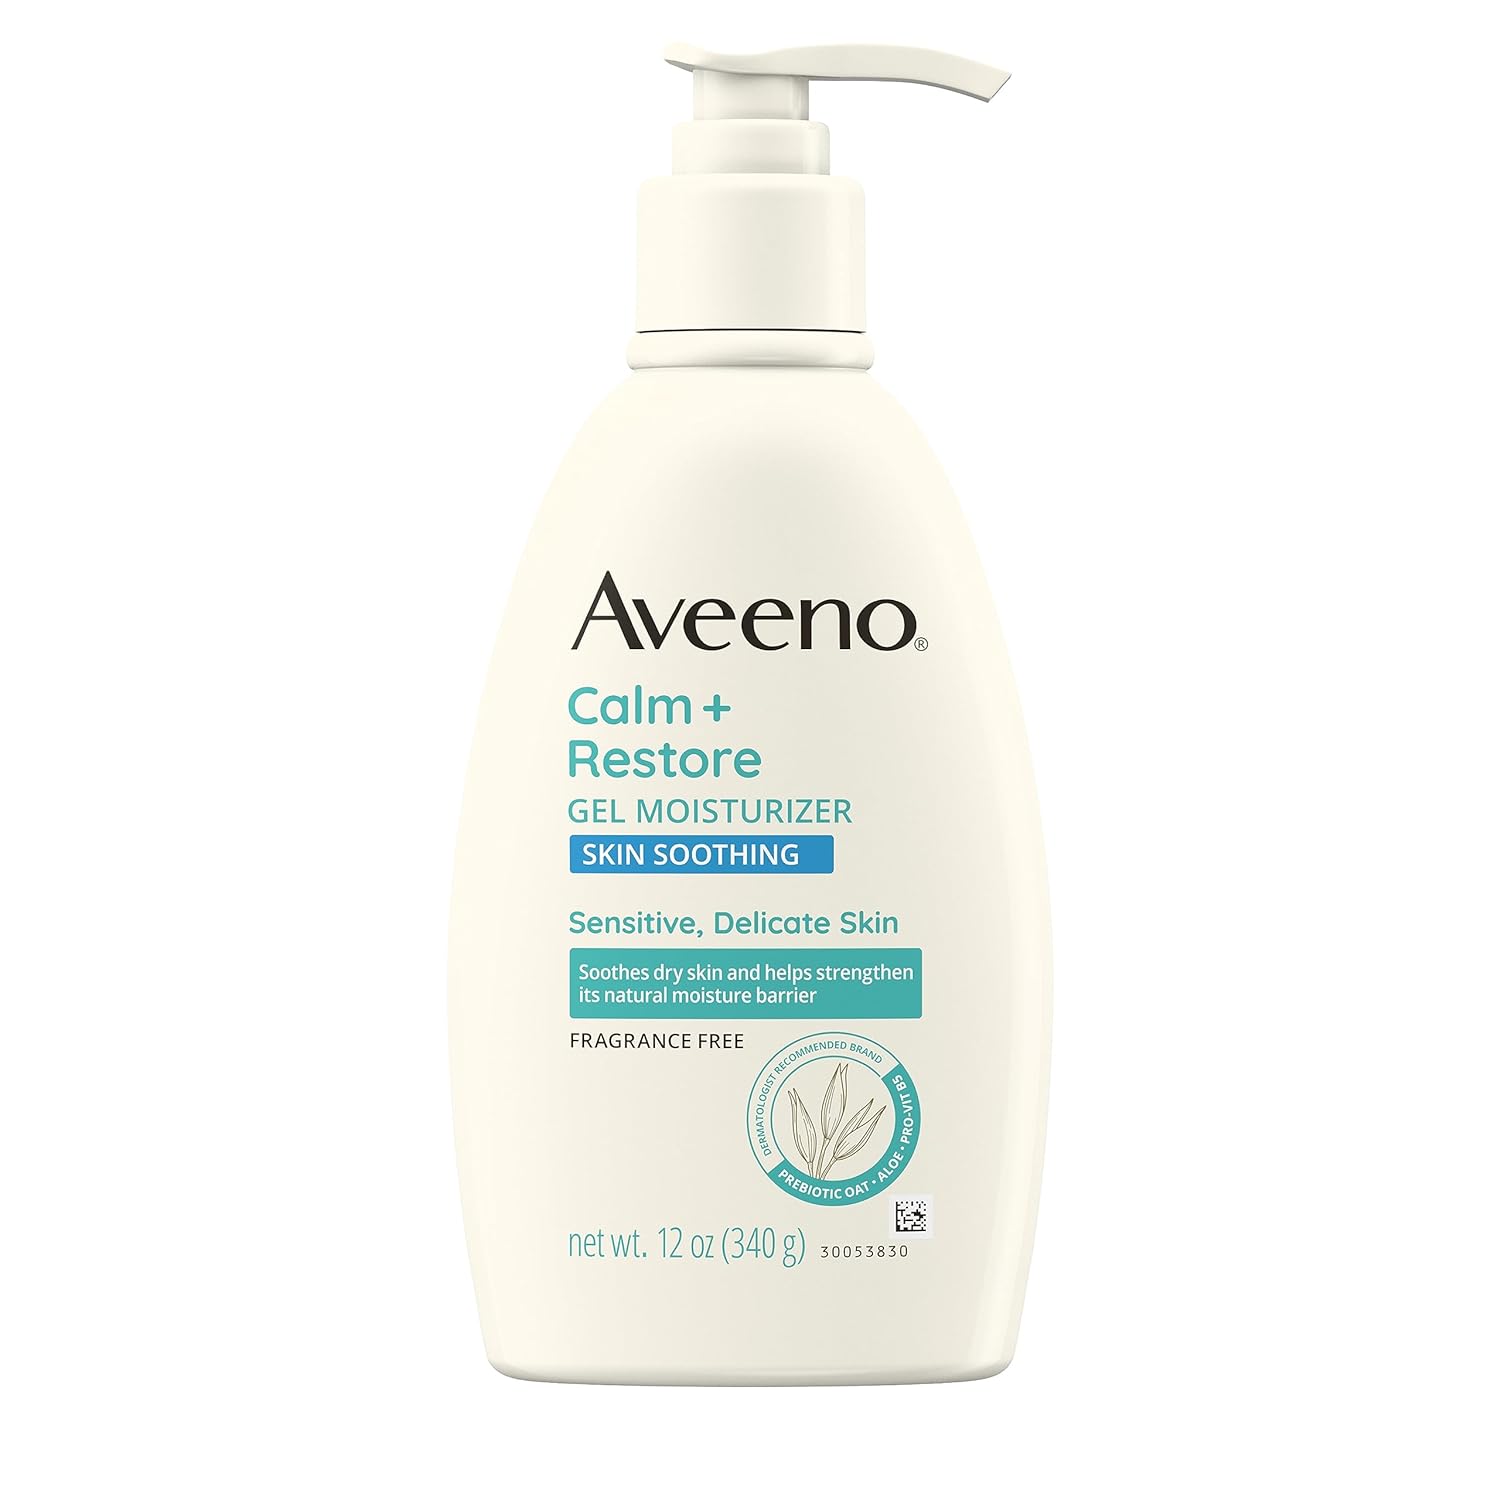 Aveeno Calm + Restore Gel Body Moisturizer for Sensitive, Delicate Skin, Lightweight Daily Dry Skin Healing Moisturizer with Prebiotic Oat, Aloe & Pro-Vitamin B5, Fragrance Free, 12 oz